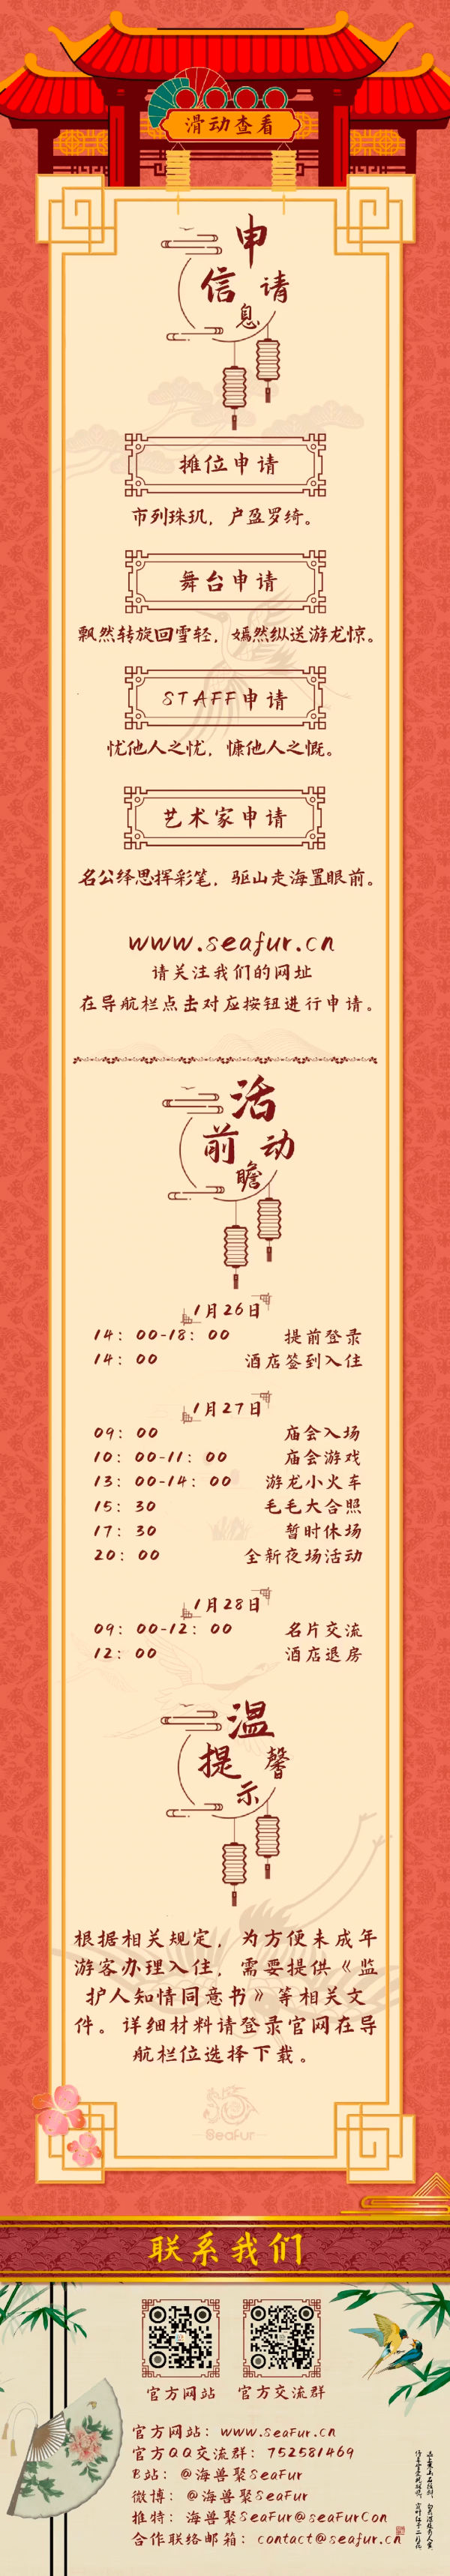 SeaFur2024 格桑开·龙腾跃's poster-2